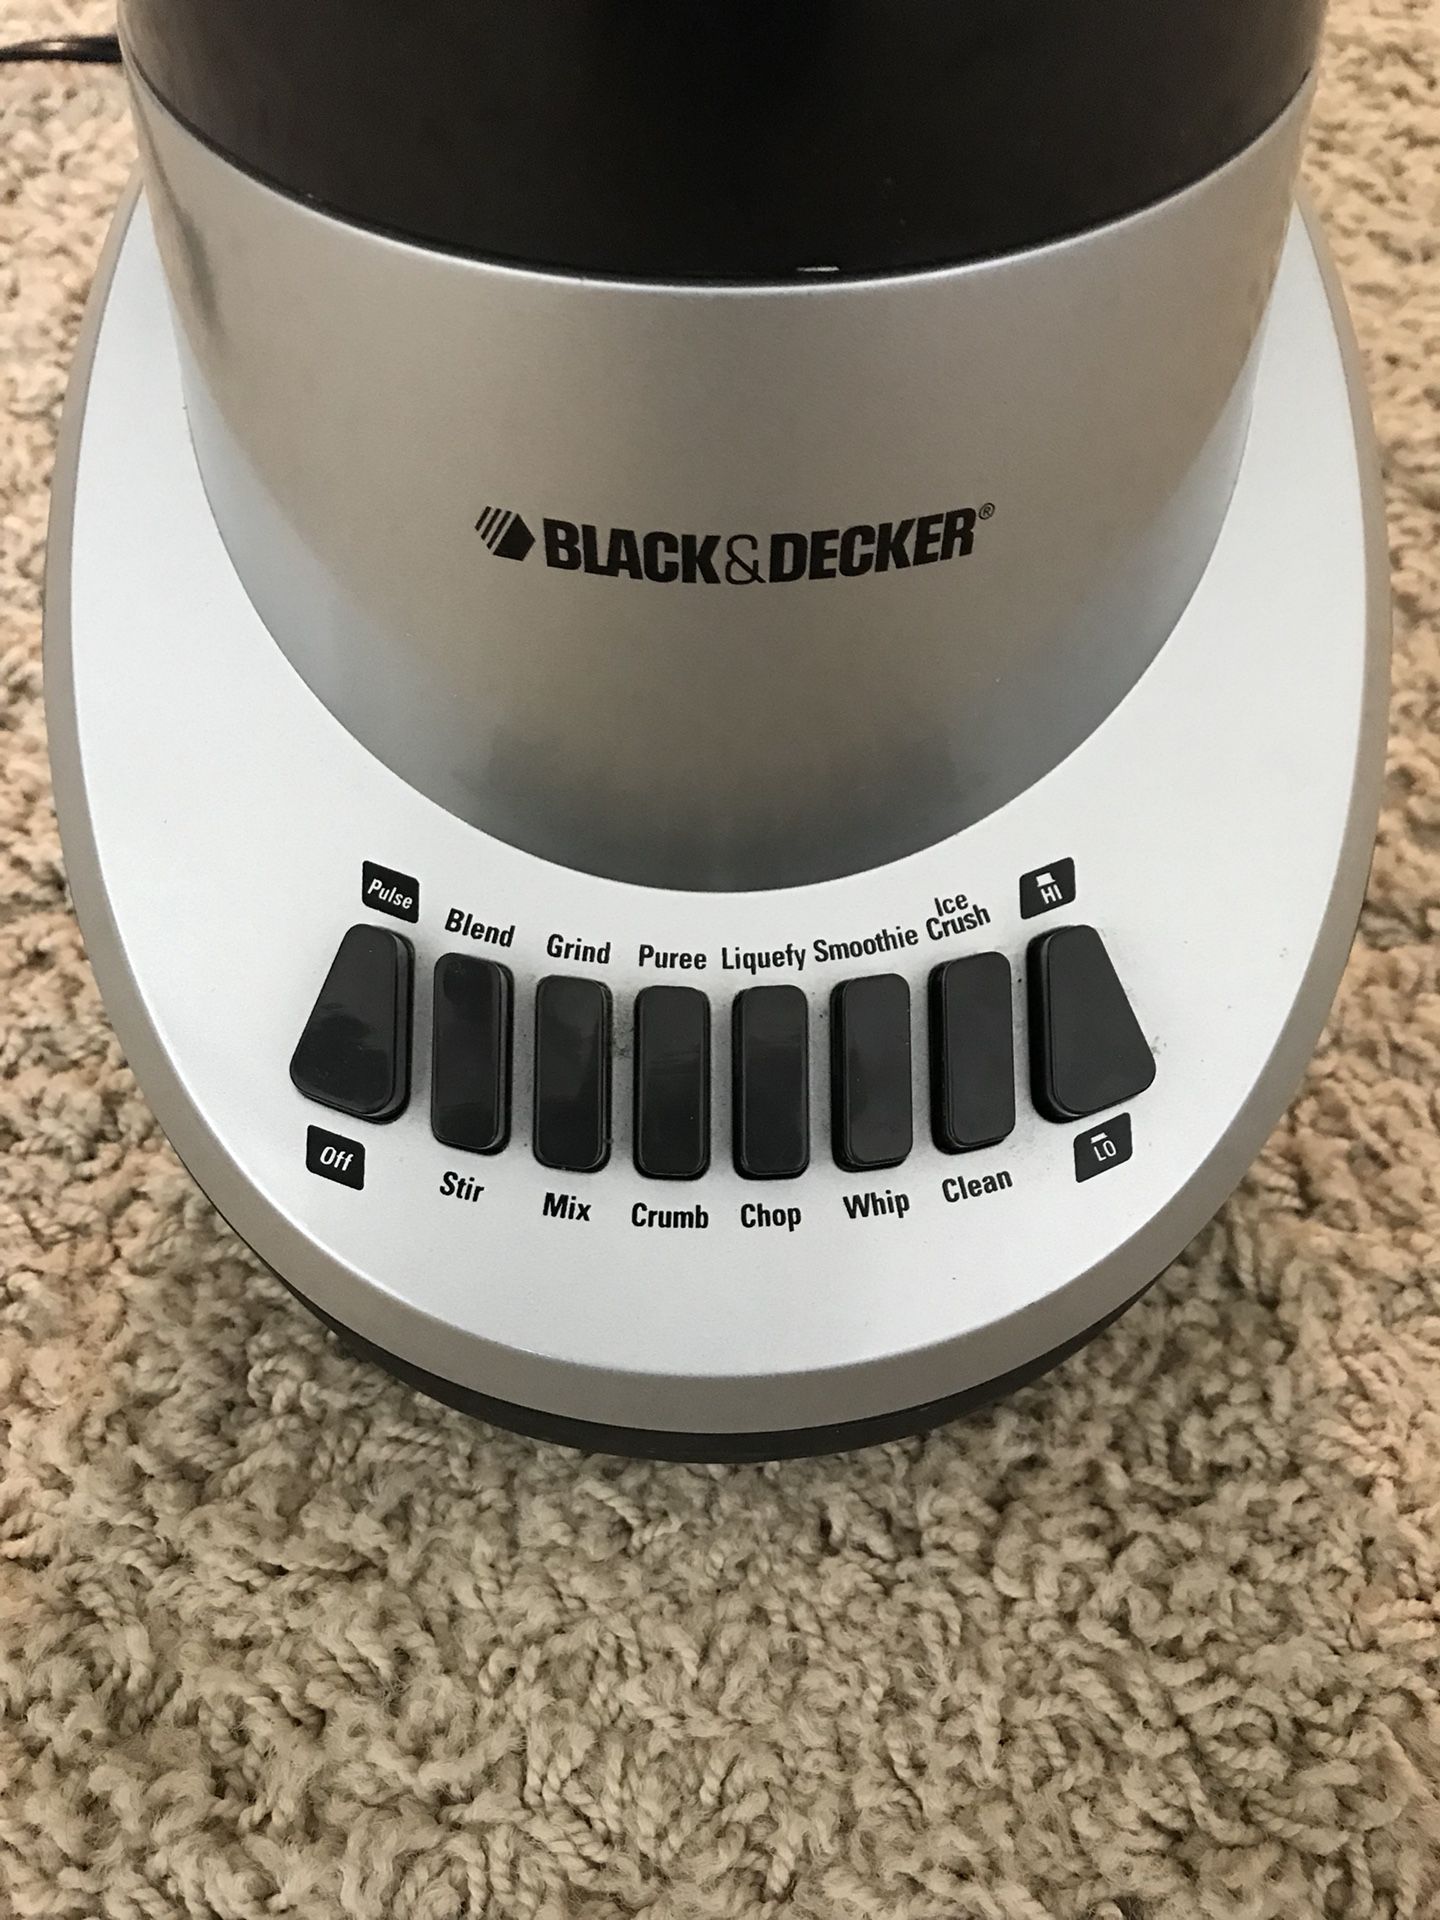 Bl1130sg Black & Decker FusionBlade Blender